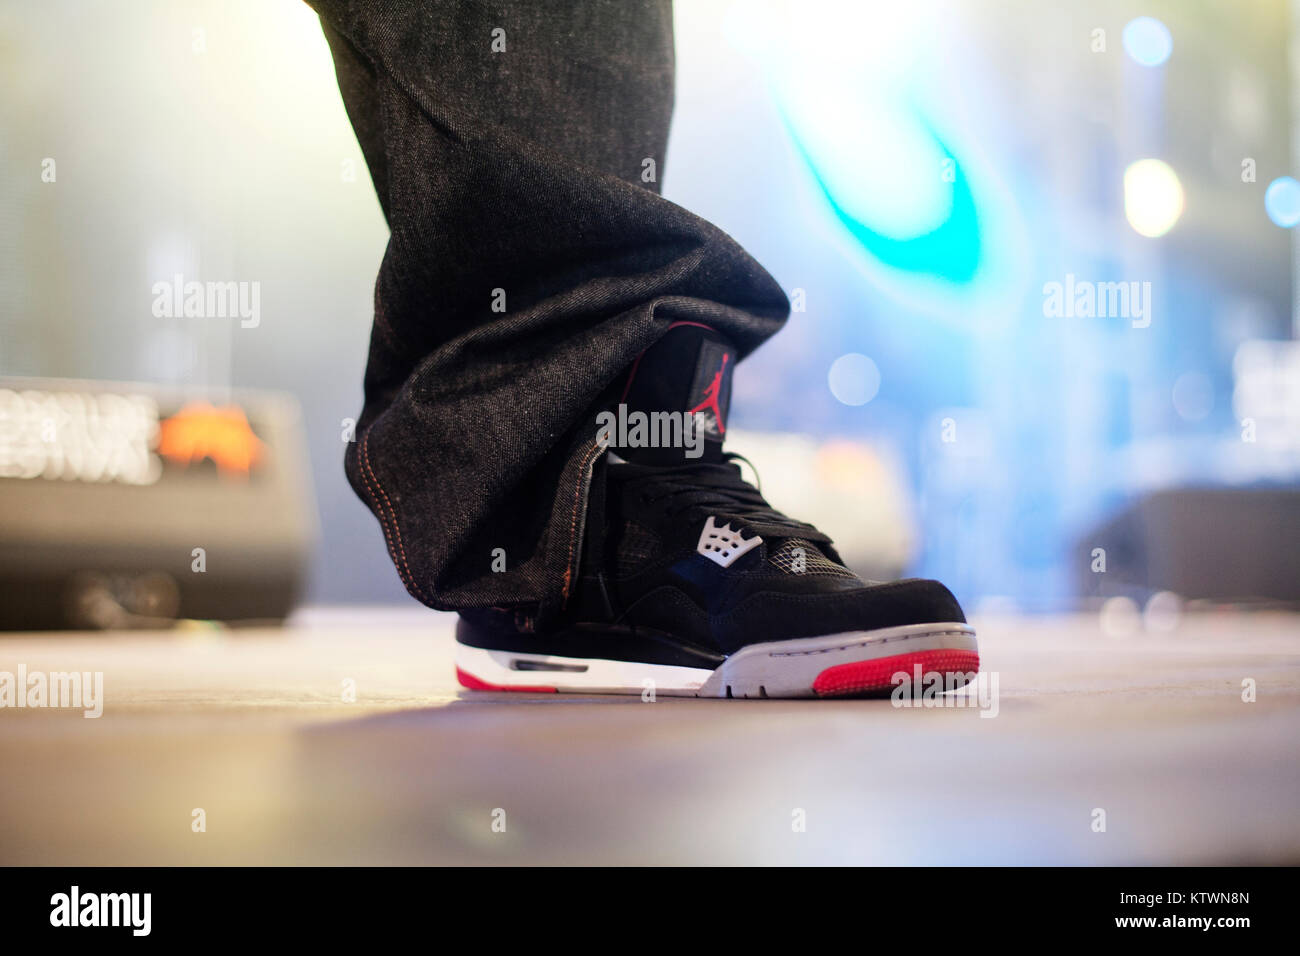 Nike air jordan hi-res stock photography and images - Alamy